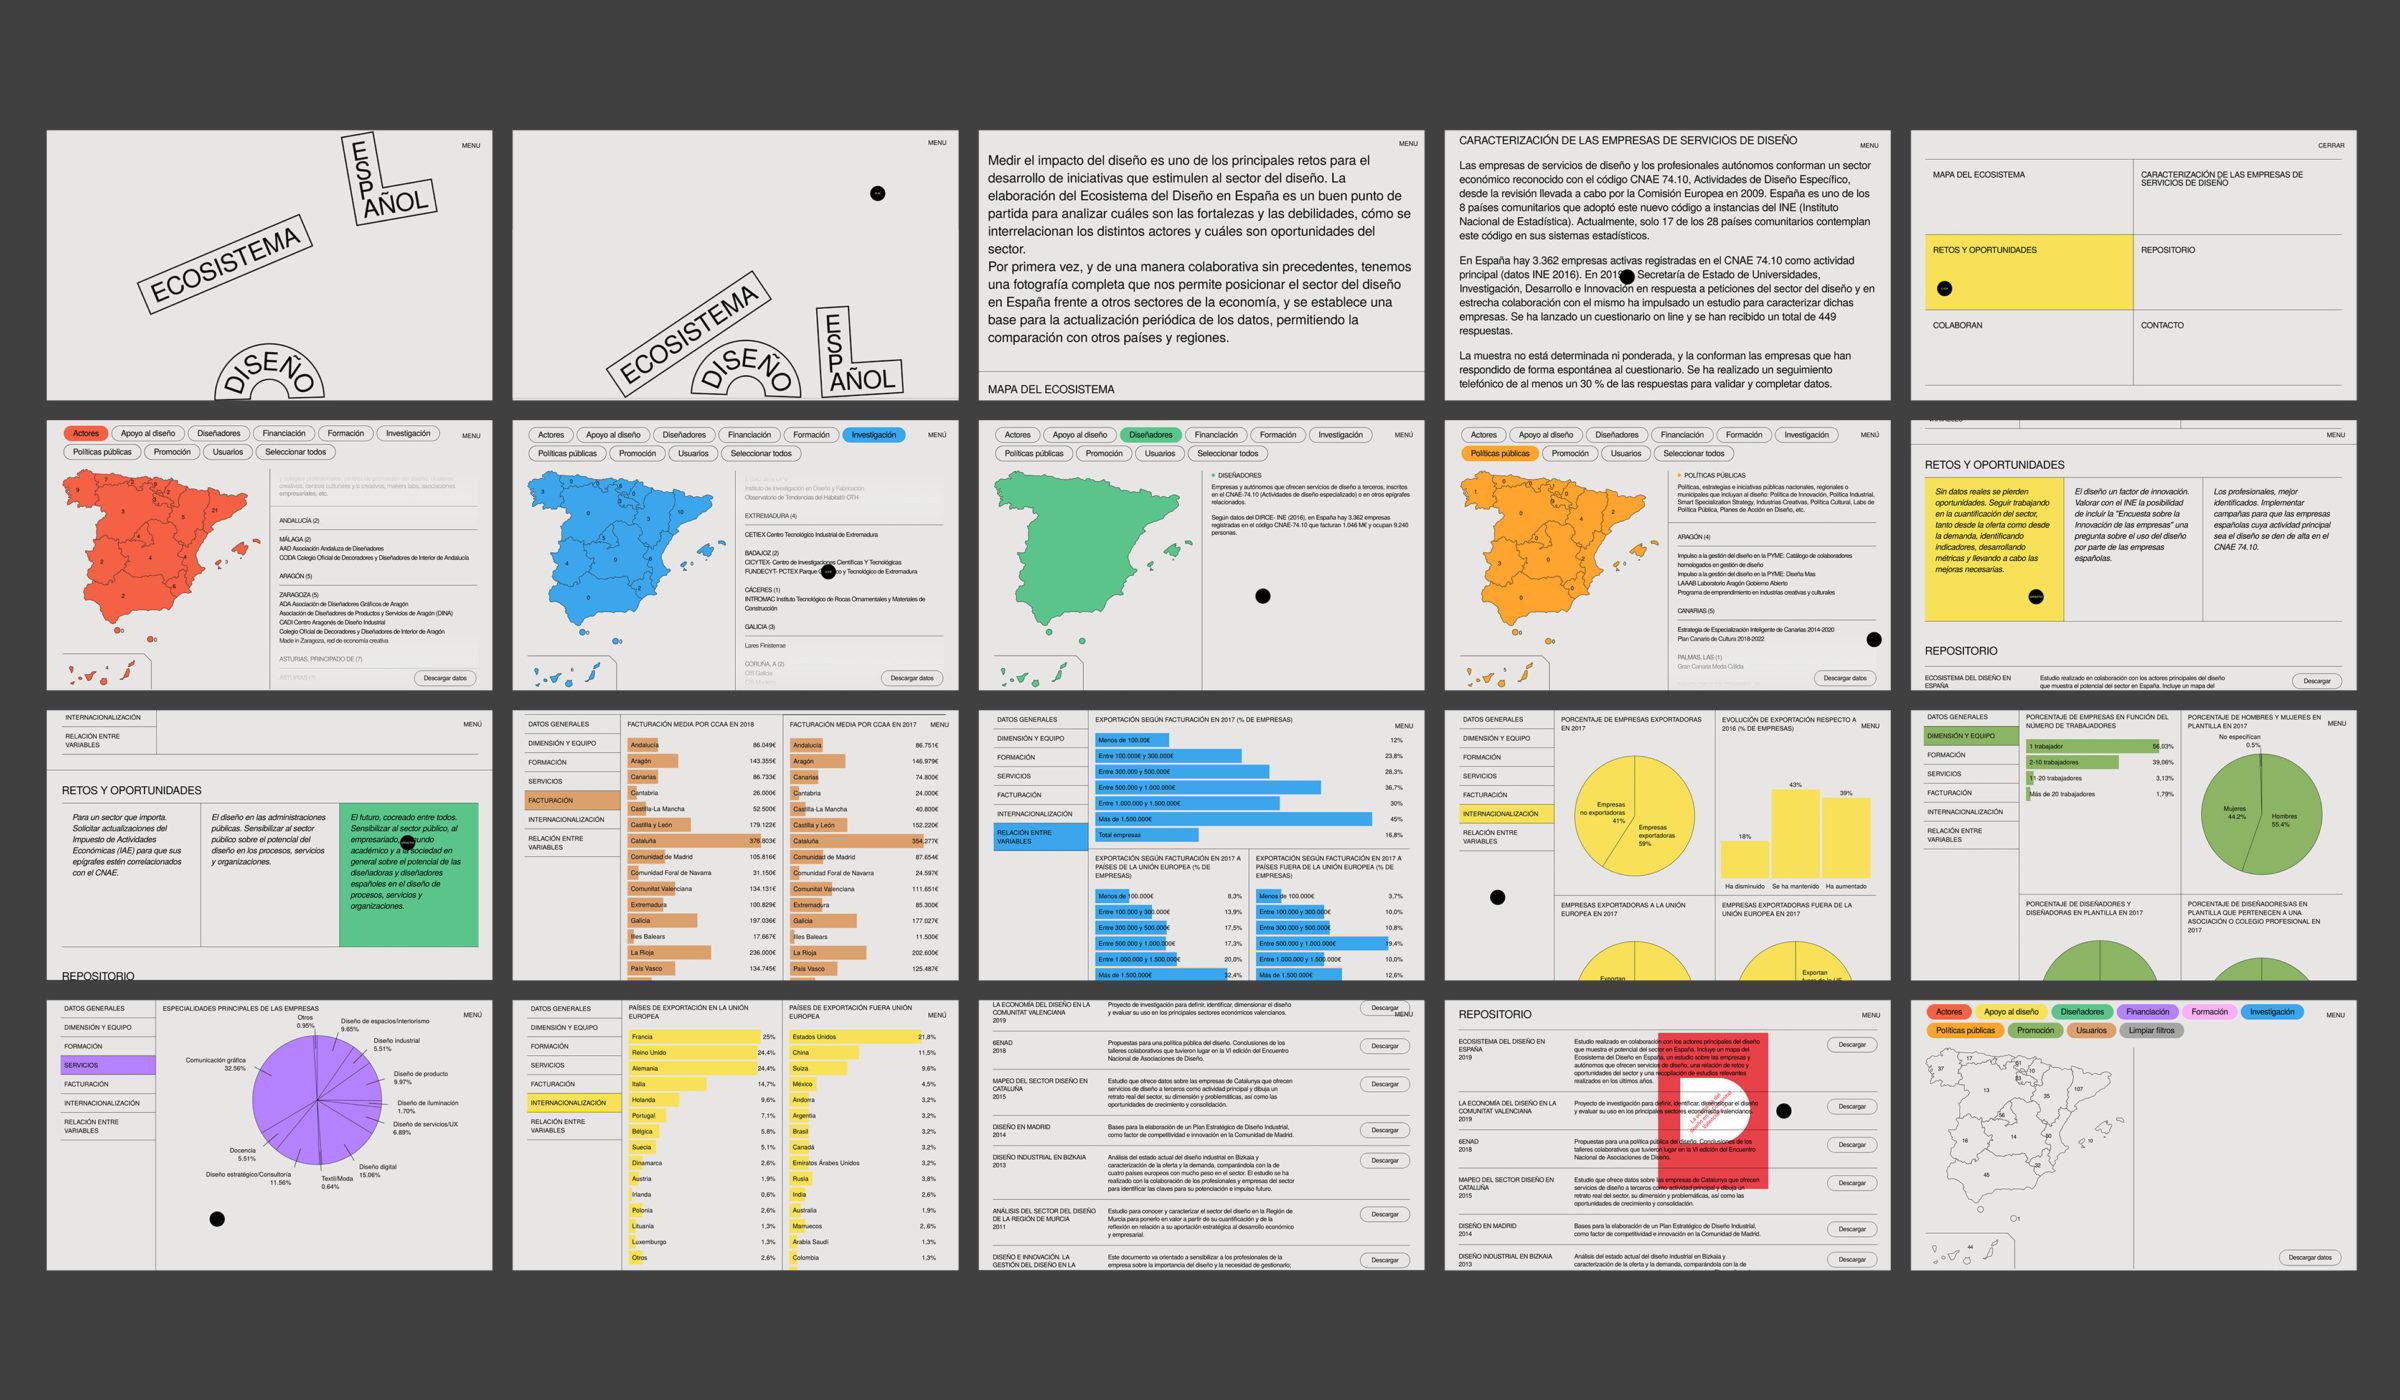 FOLCH - Ecosistema: A Blueprint for Spanish Design